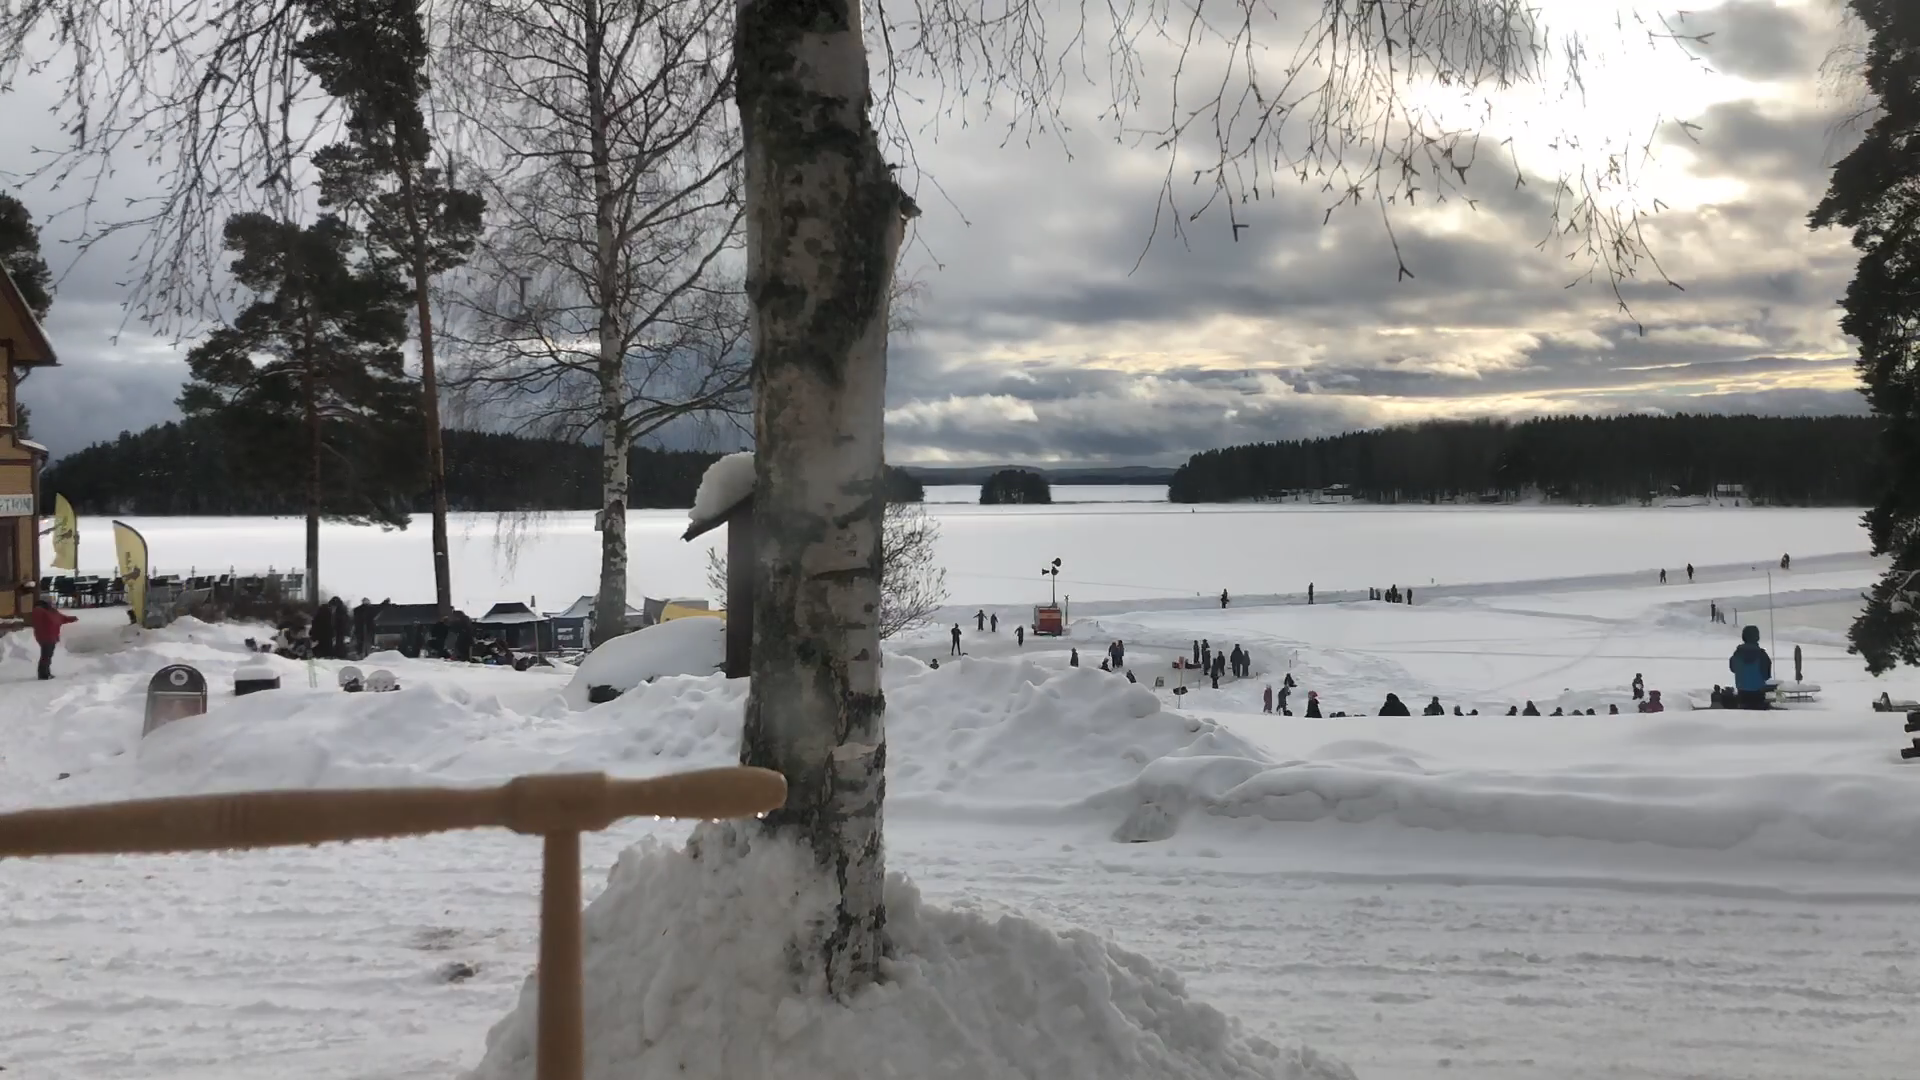 Skate 4 Air Vinter 2019